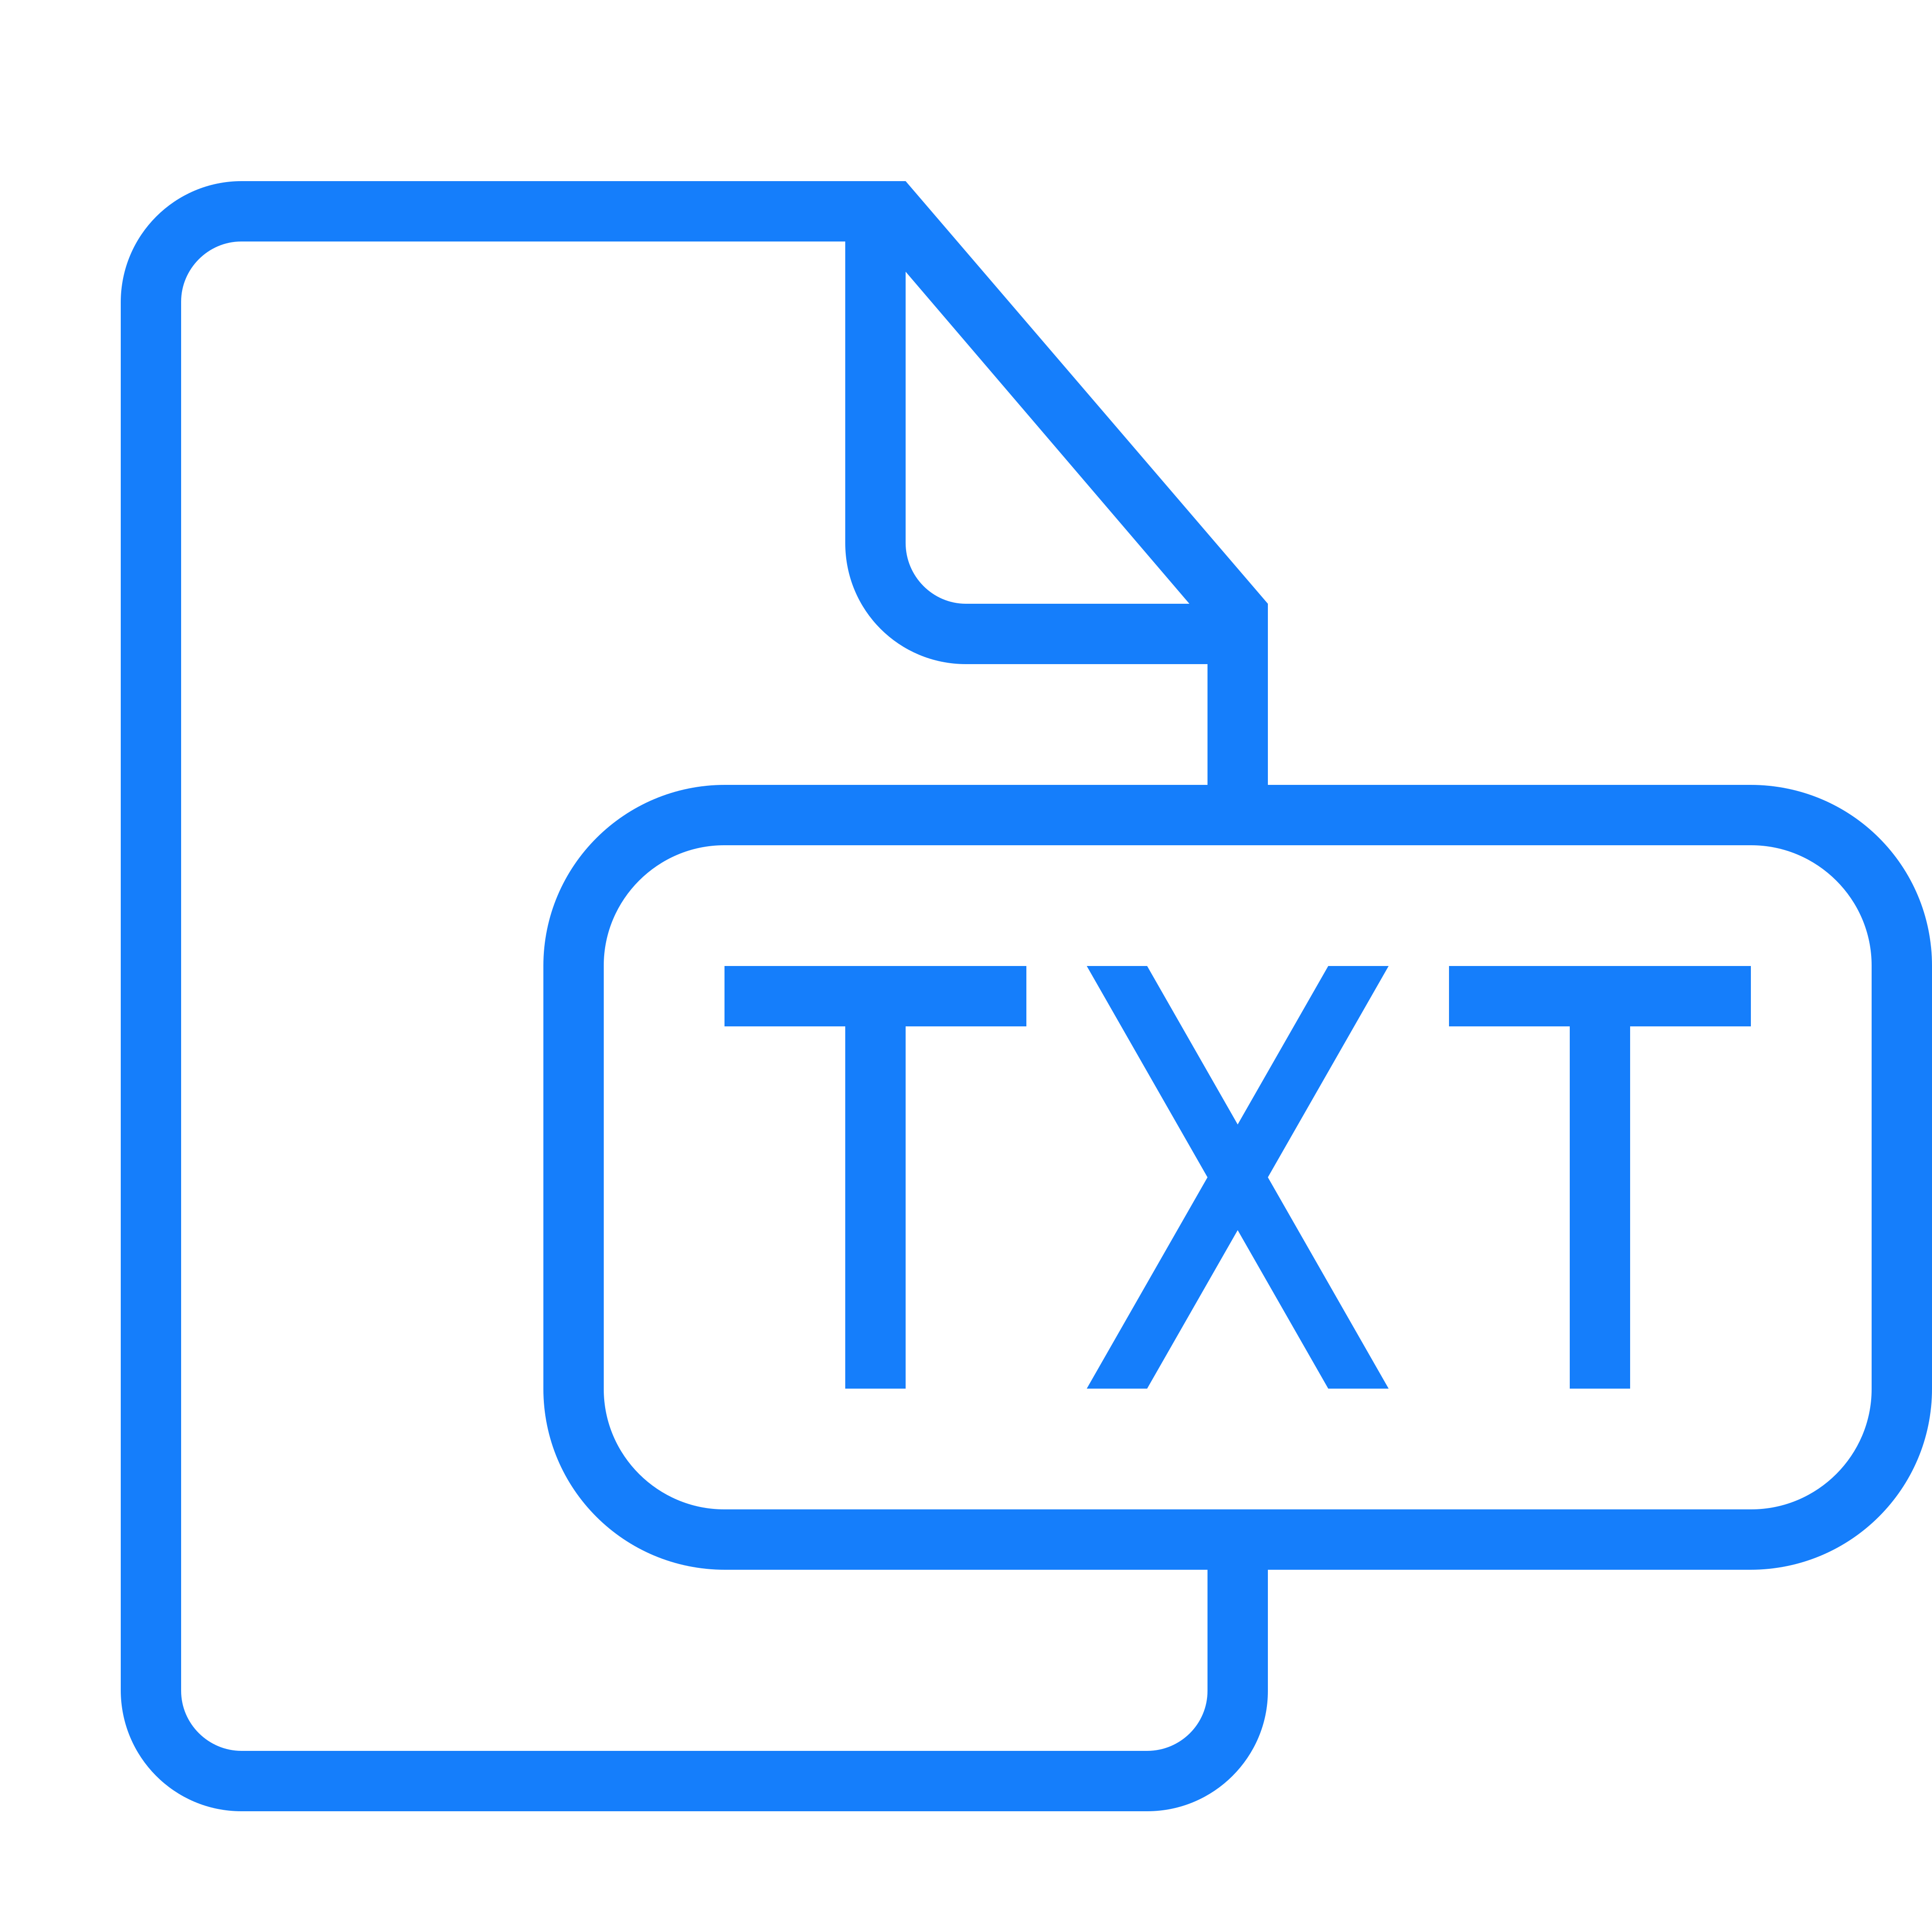 Знак txt. Иконка txt. Тхт символ. Txt Формат. Значок XML.